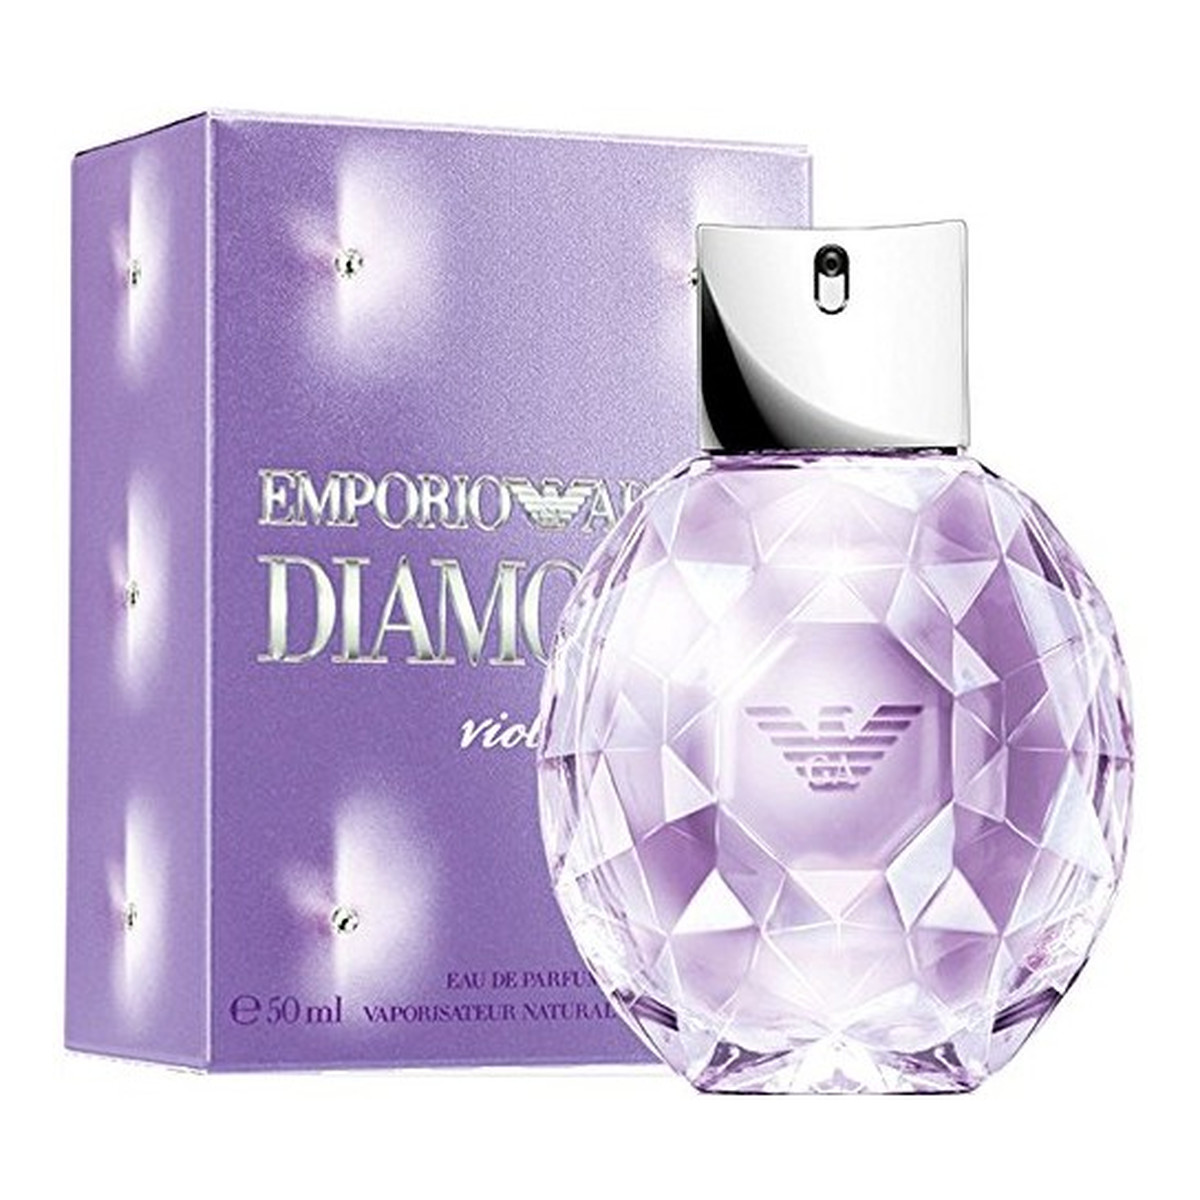 Giorgio Armani Diamonds Violet Woda perfumowana 50ml